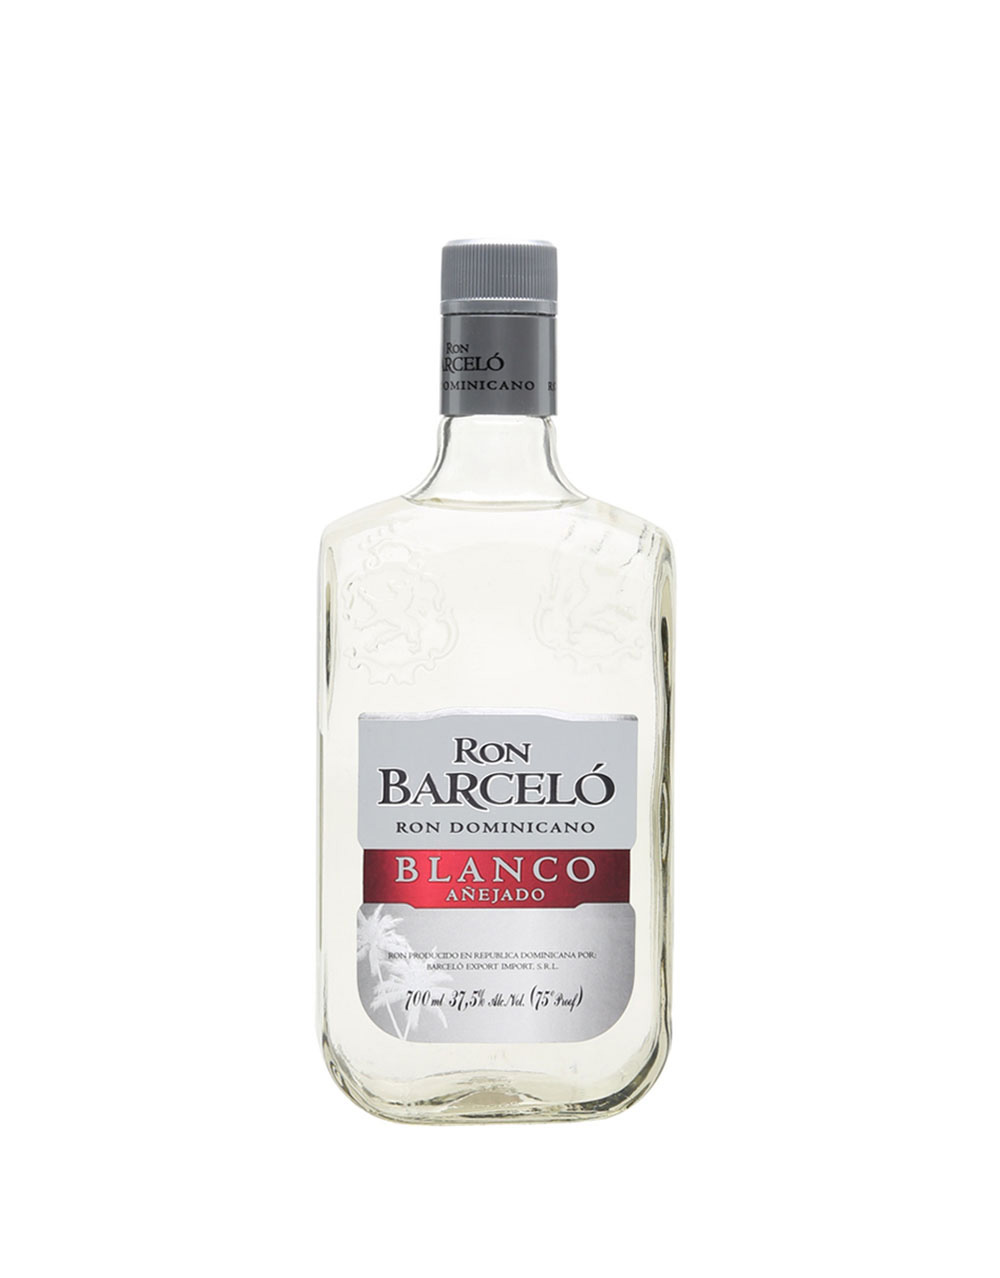 Ron Barcelo Blanco Anejado Tequila